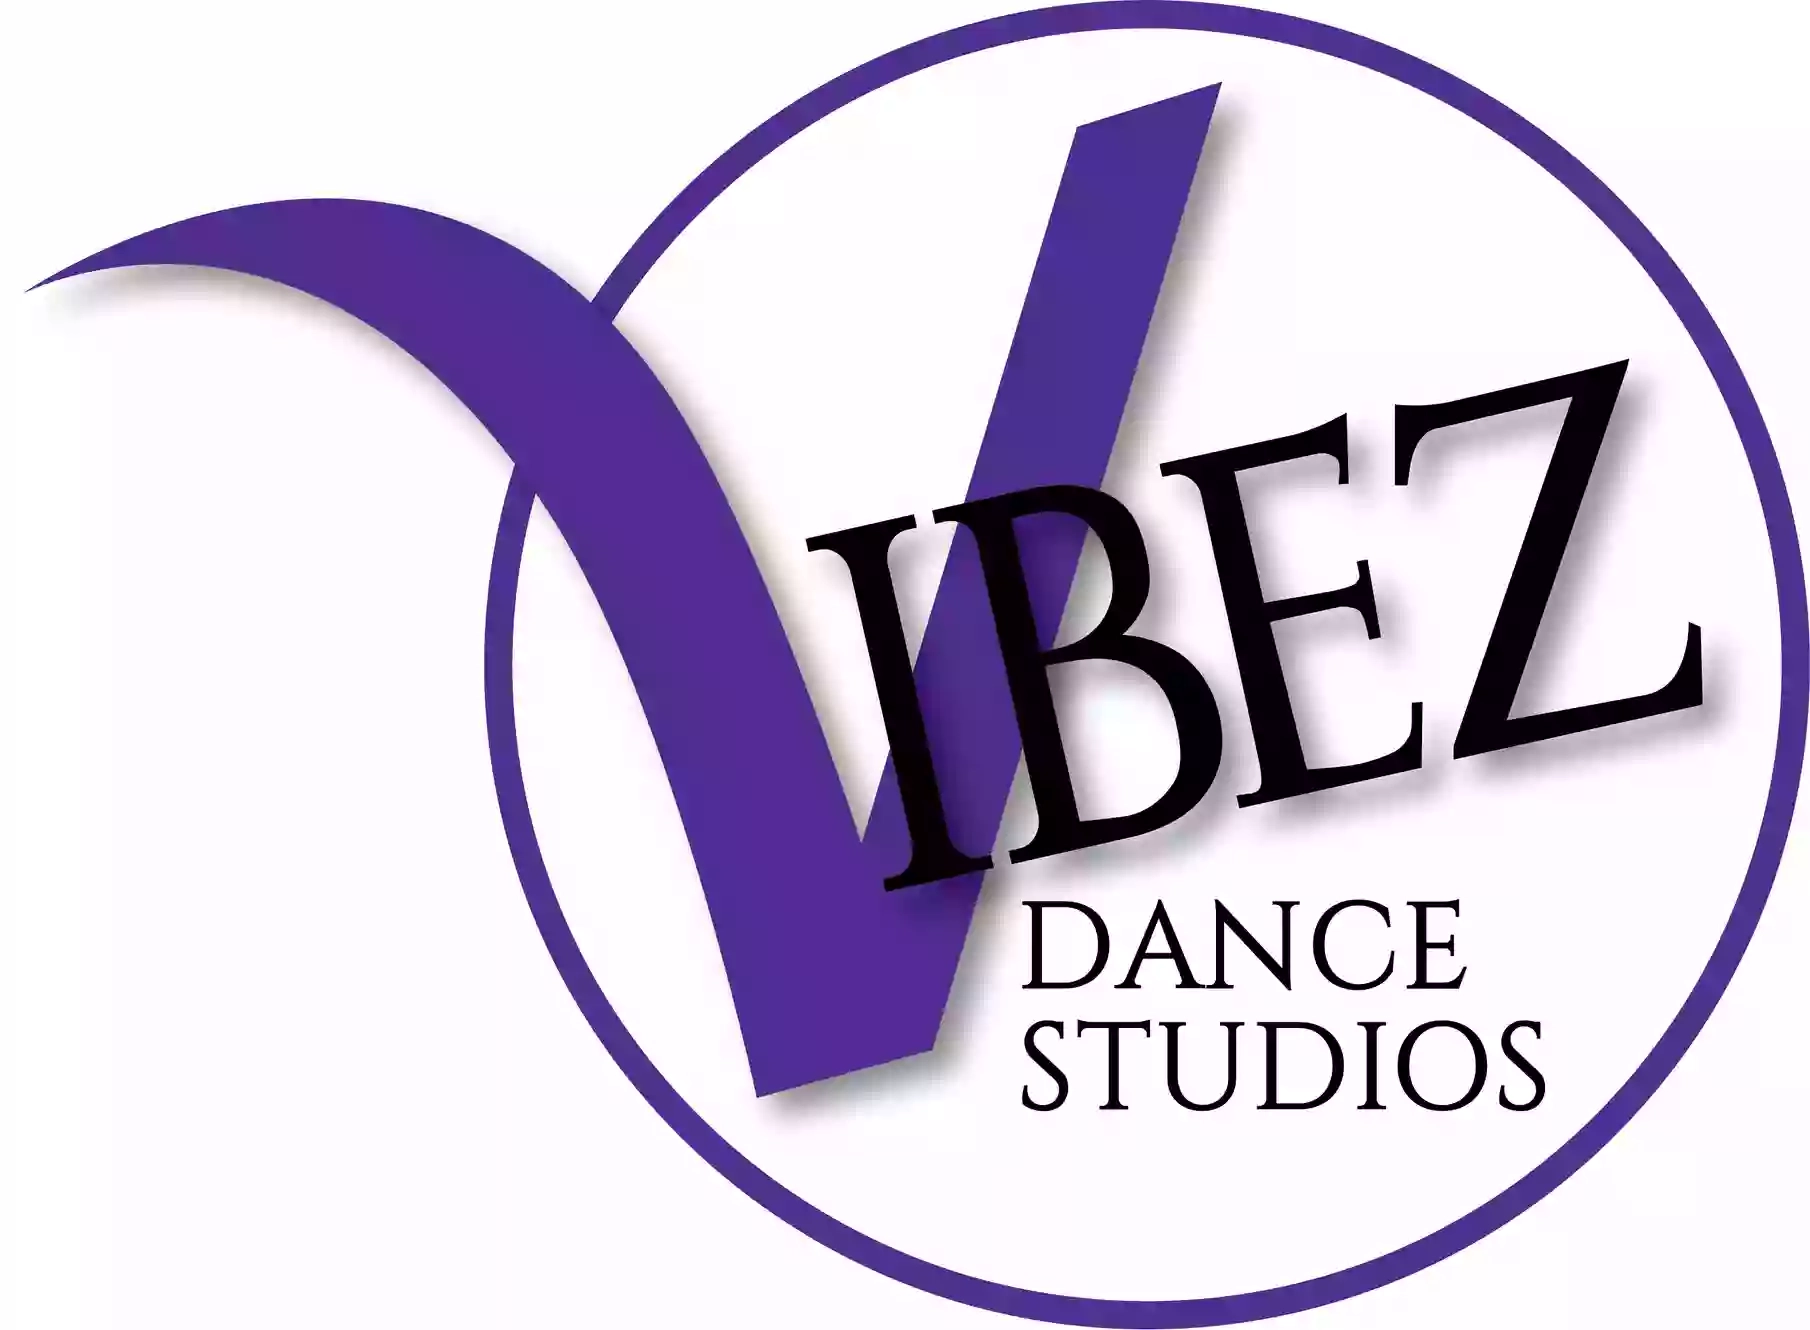 Vibez Dance Studios